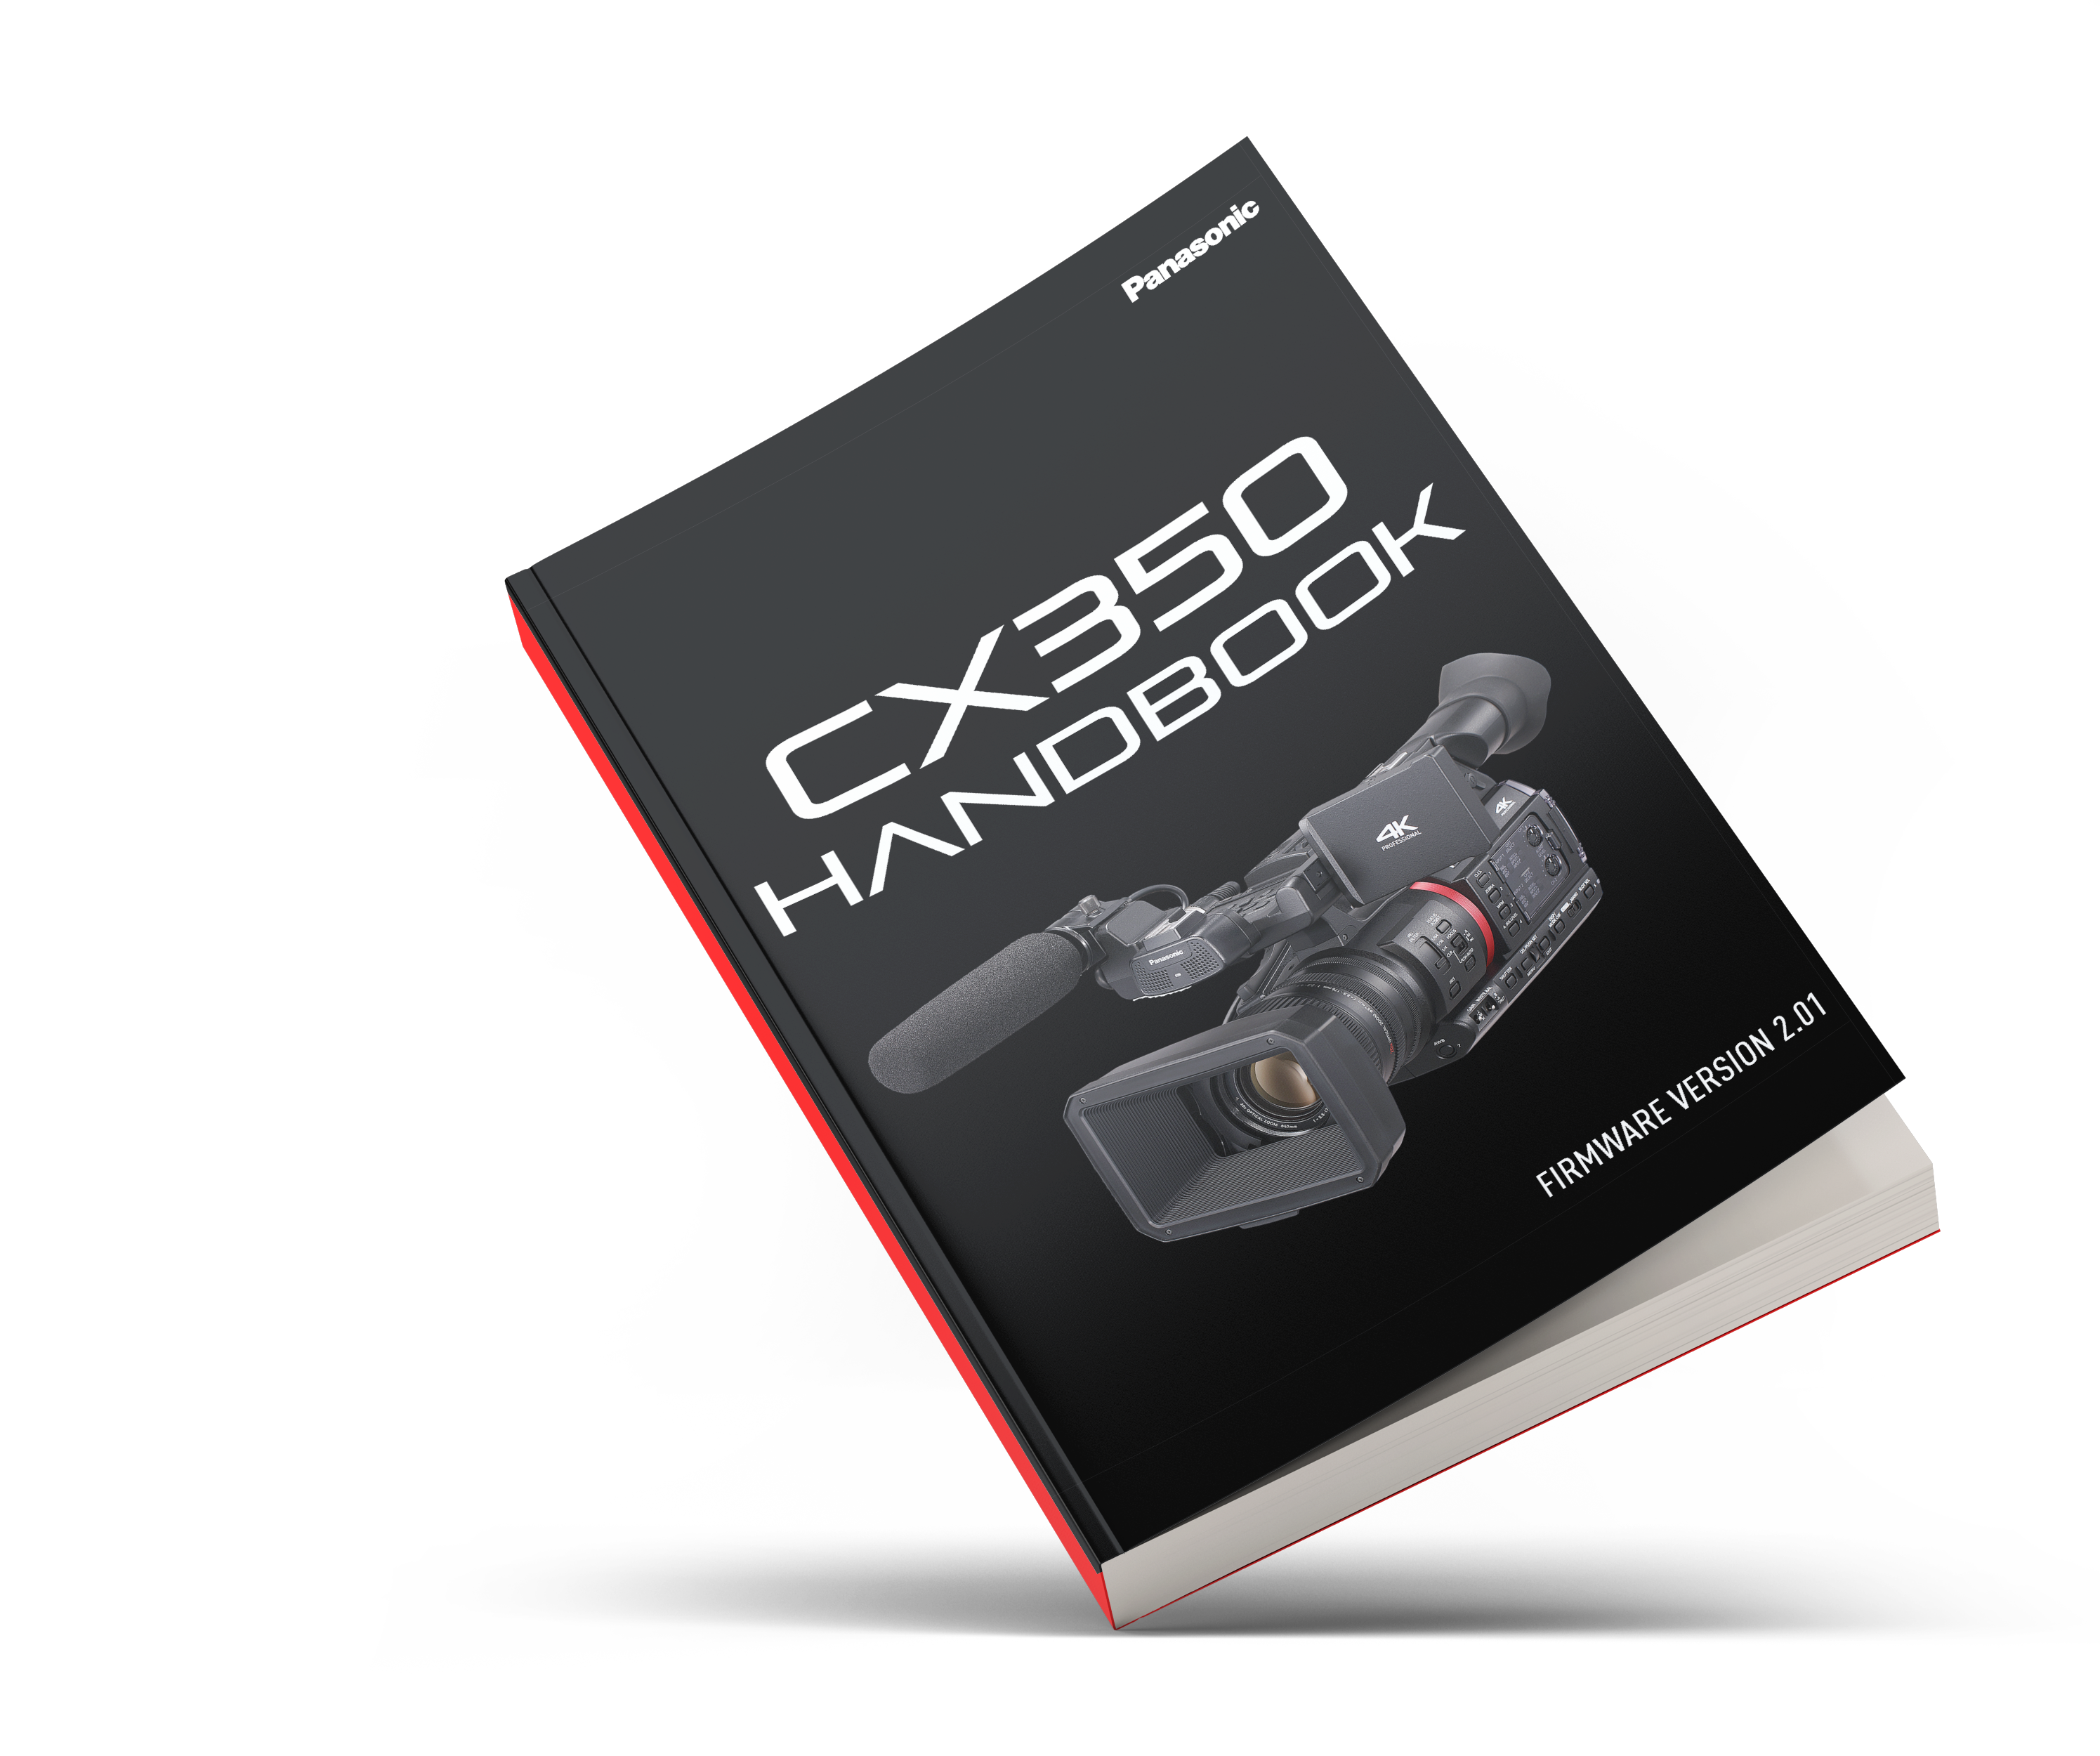 ag-cx350 camcorder settings codecs operating tips tricks manual instructions guide handbook for the panasonic cx350 4K NDI camera